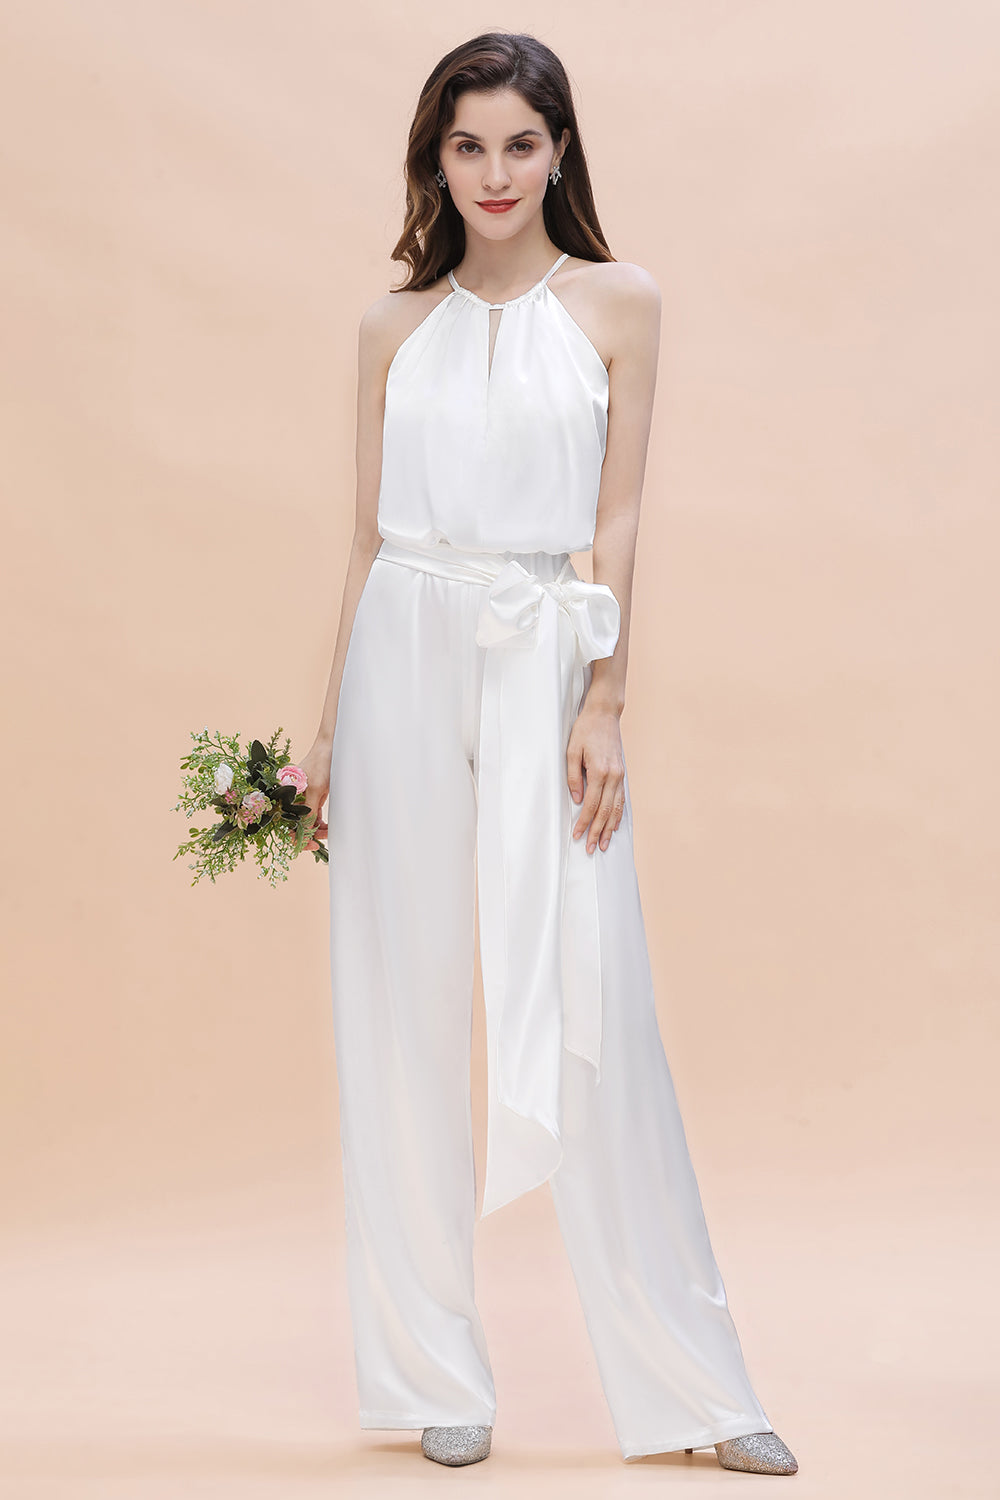 Affordable Halter Sleeveless Ivory Charmeuse Bridesmaid Jumpsuit Online-27dress